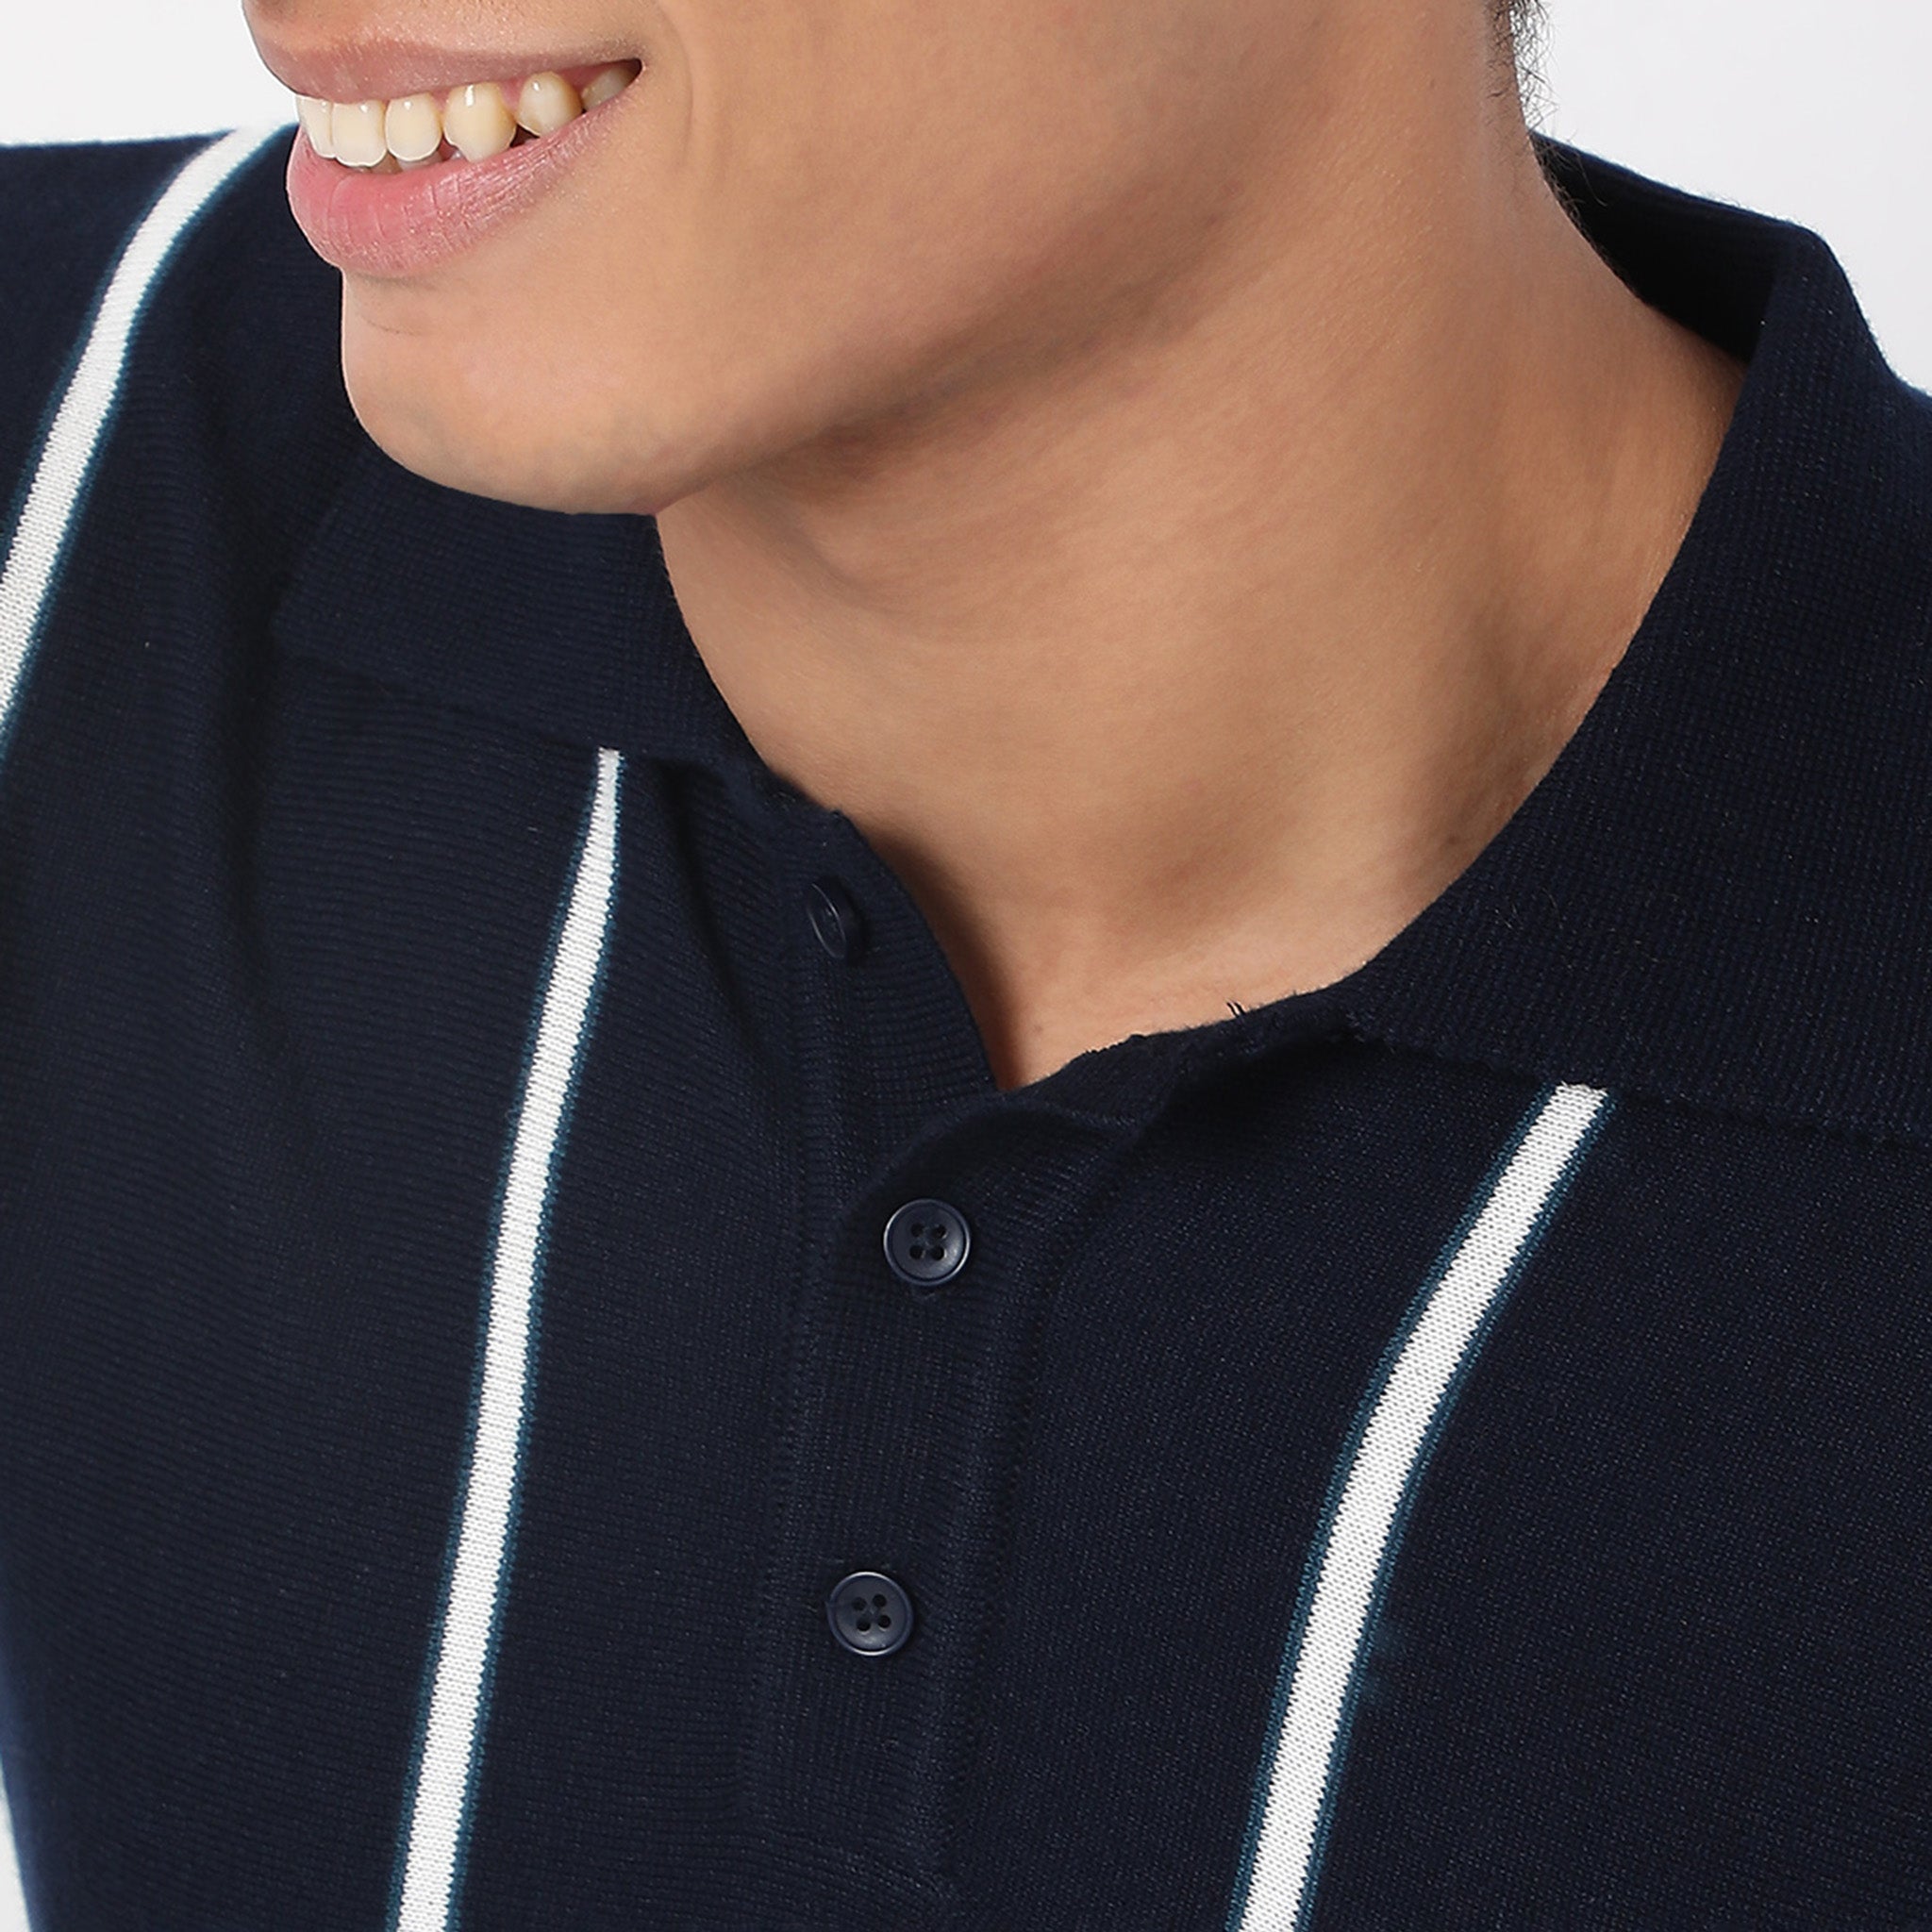 Regular Fit Striped Flatknit T-Shirt